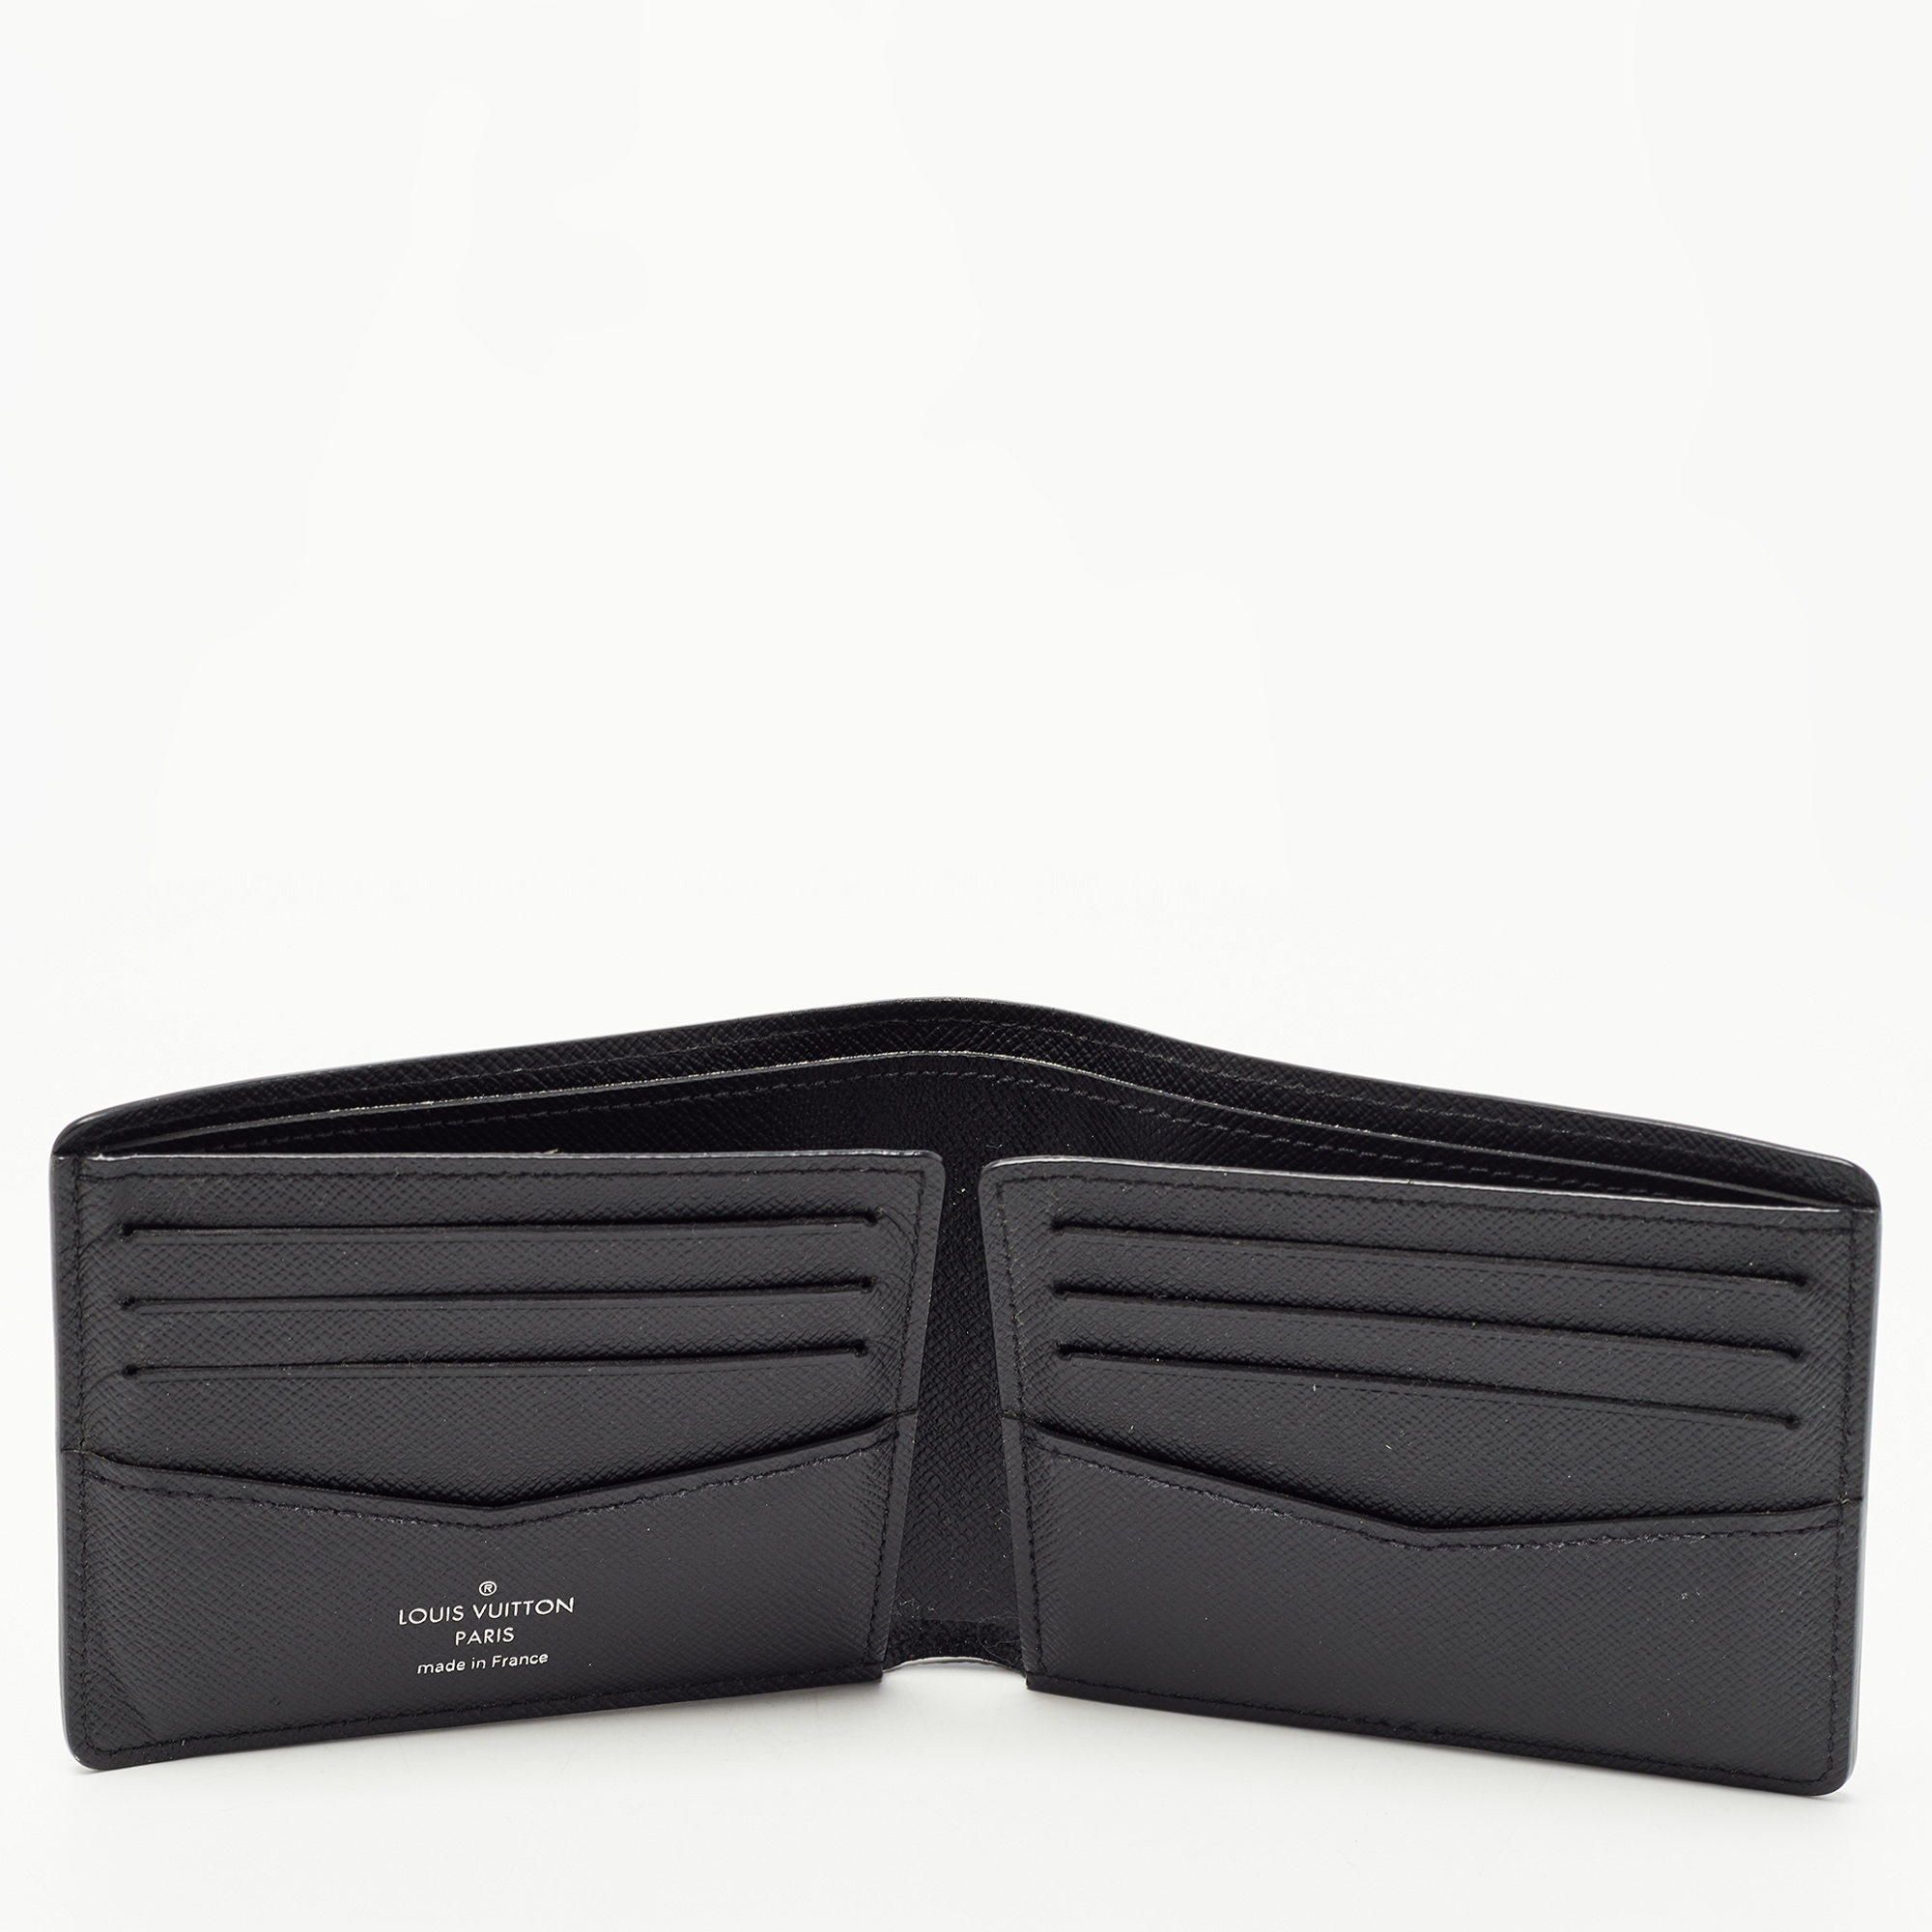 

Louis Vuitton Epi Leather Slender Wallet, Black